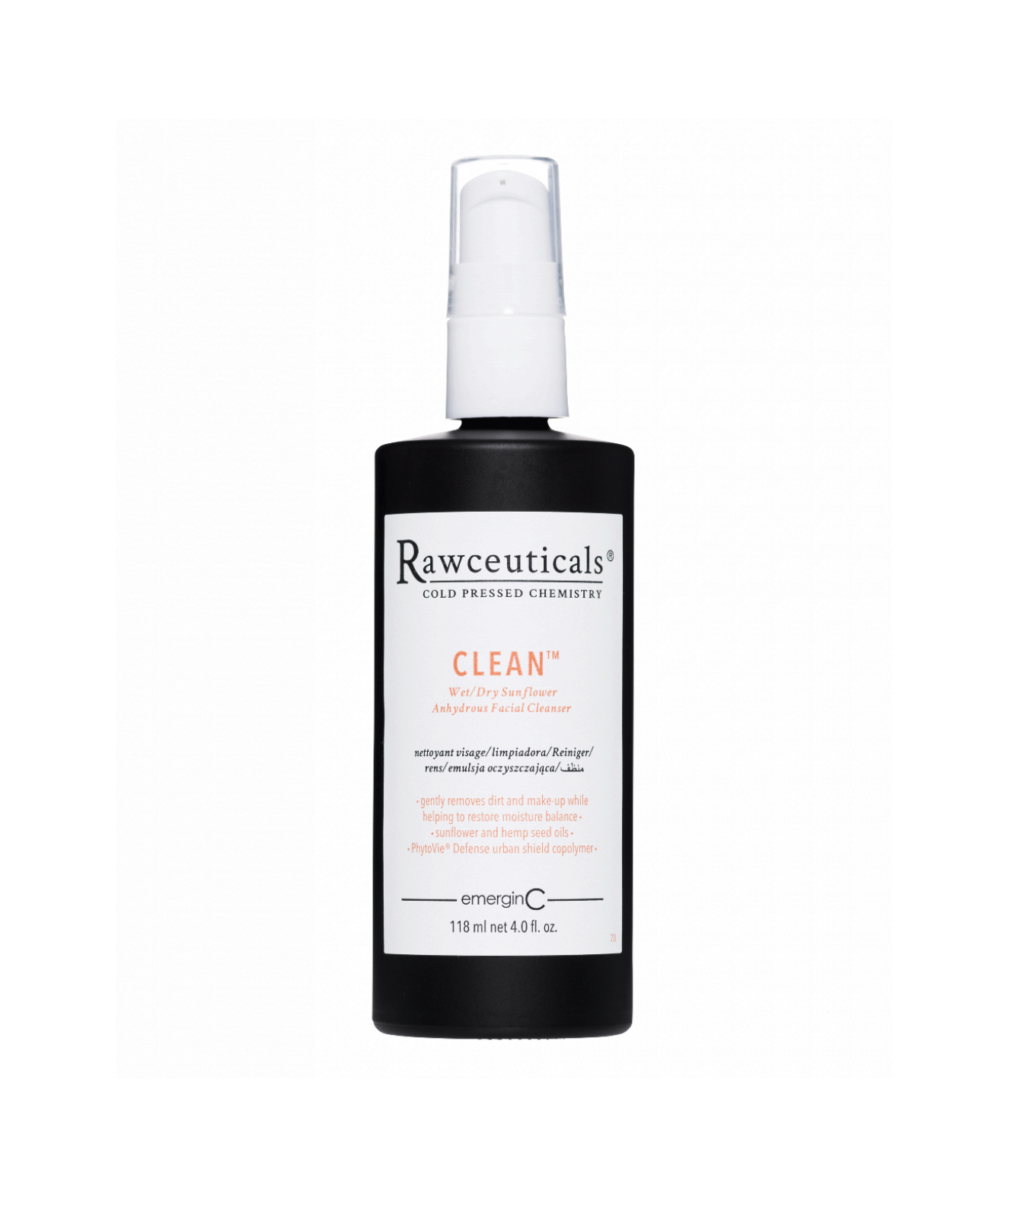 Elegant black bottle of CLEAN™ facial cleanser with a white dispenser pump.